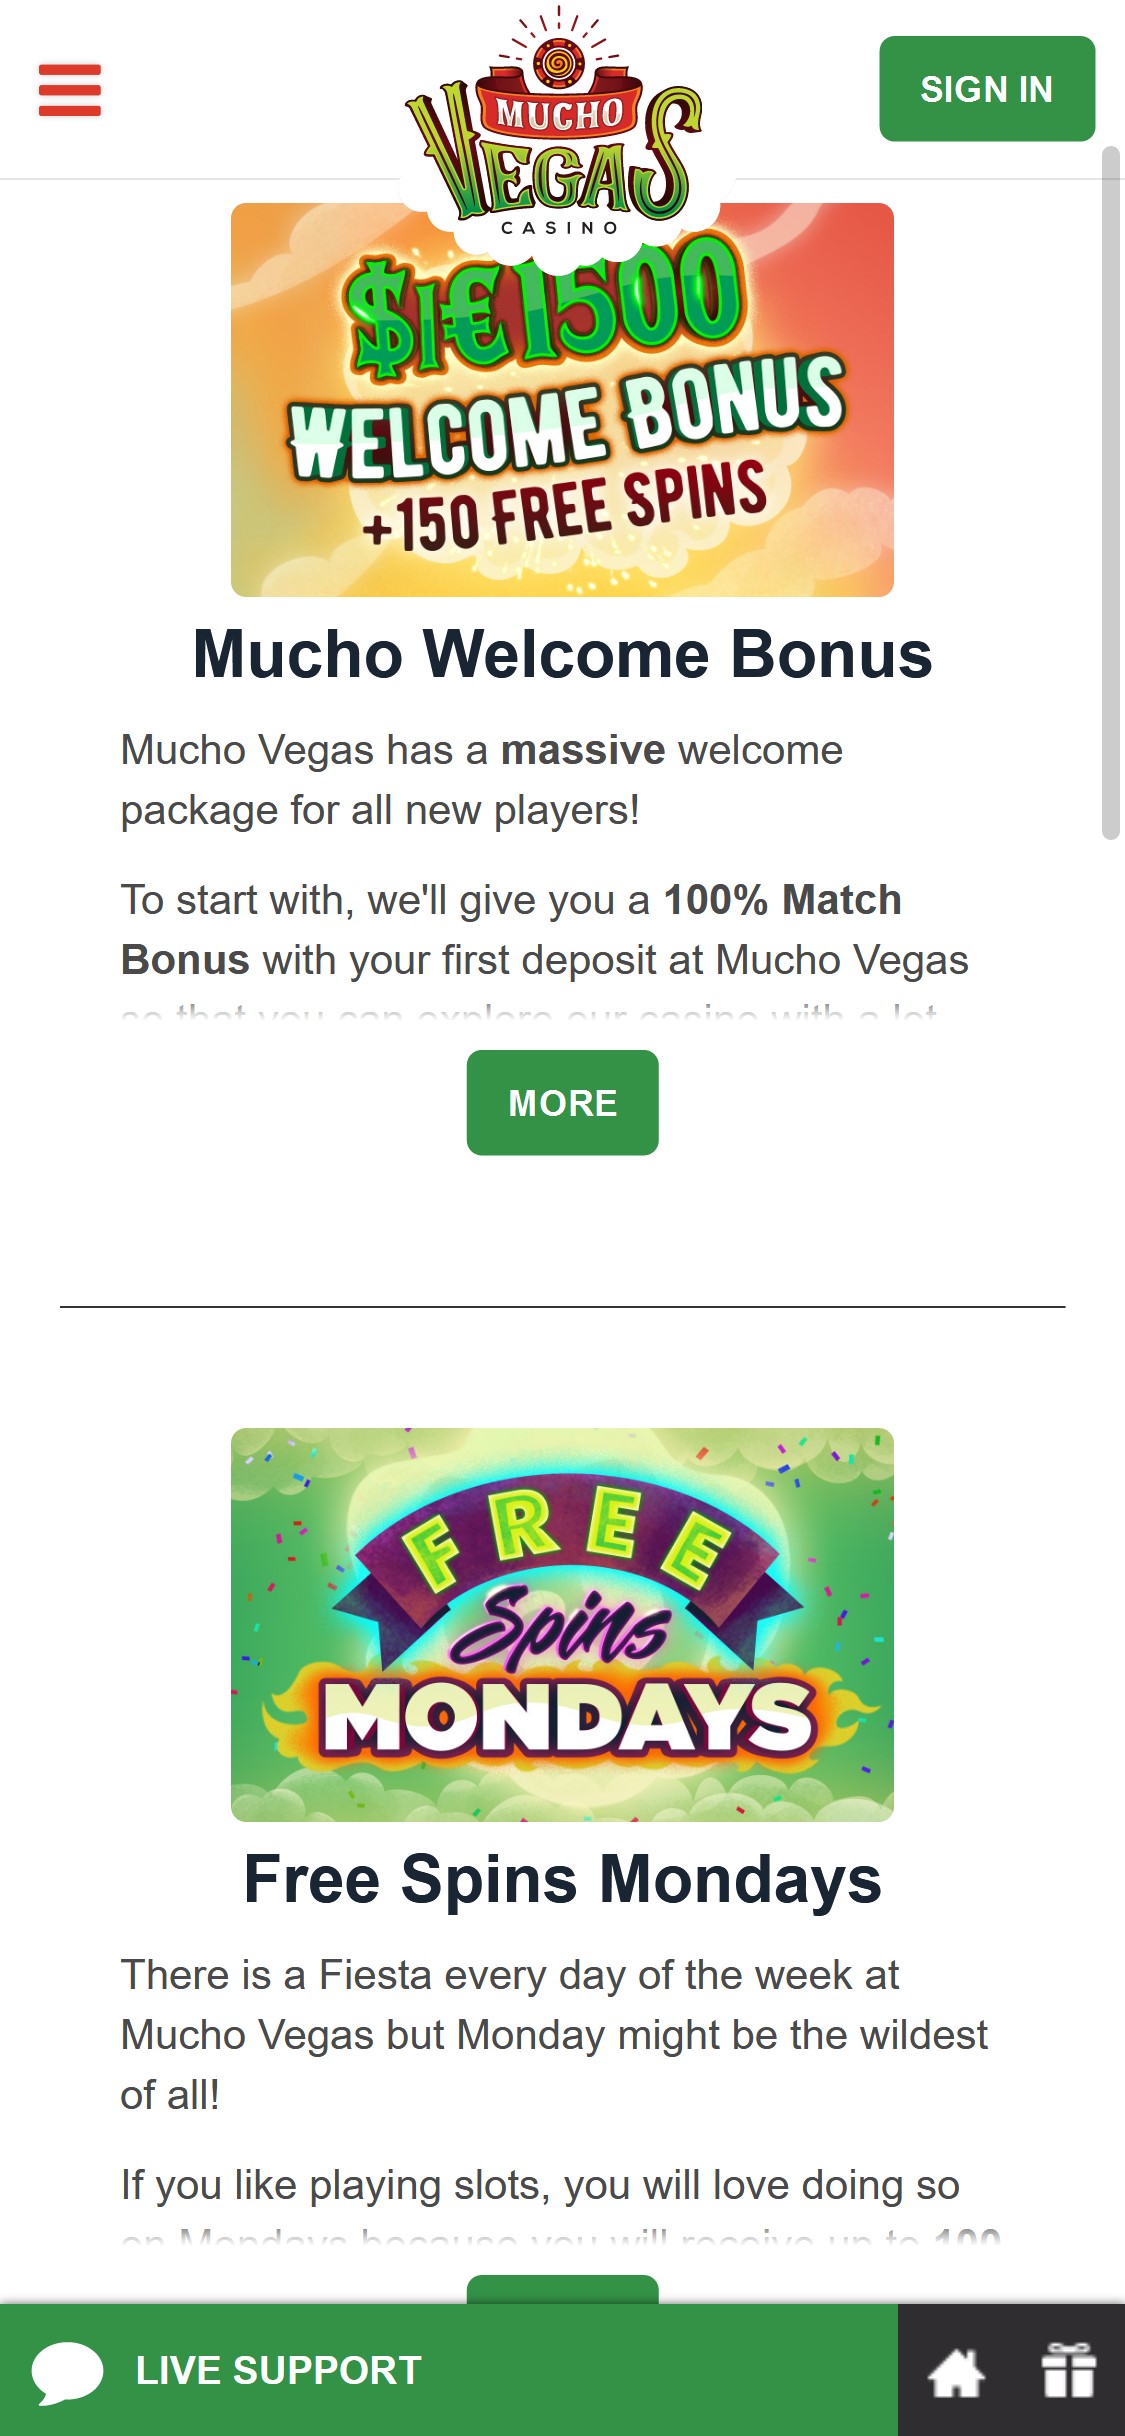 Mucho Vegas Casino Mobile No Deposit Bonus Review